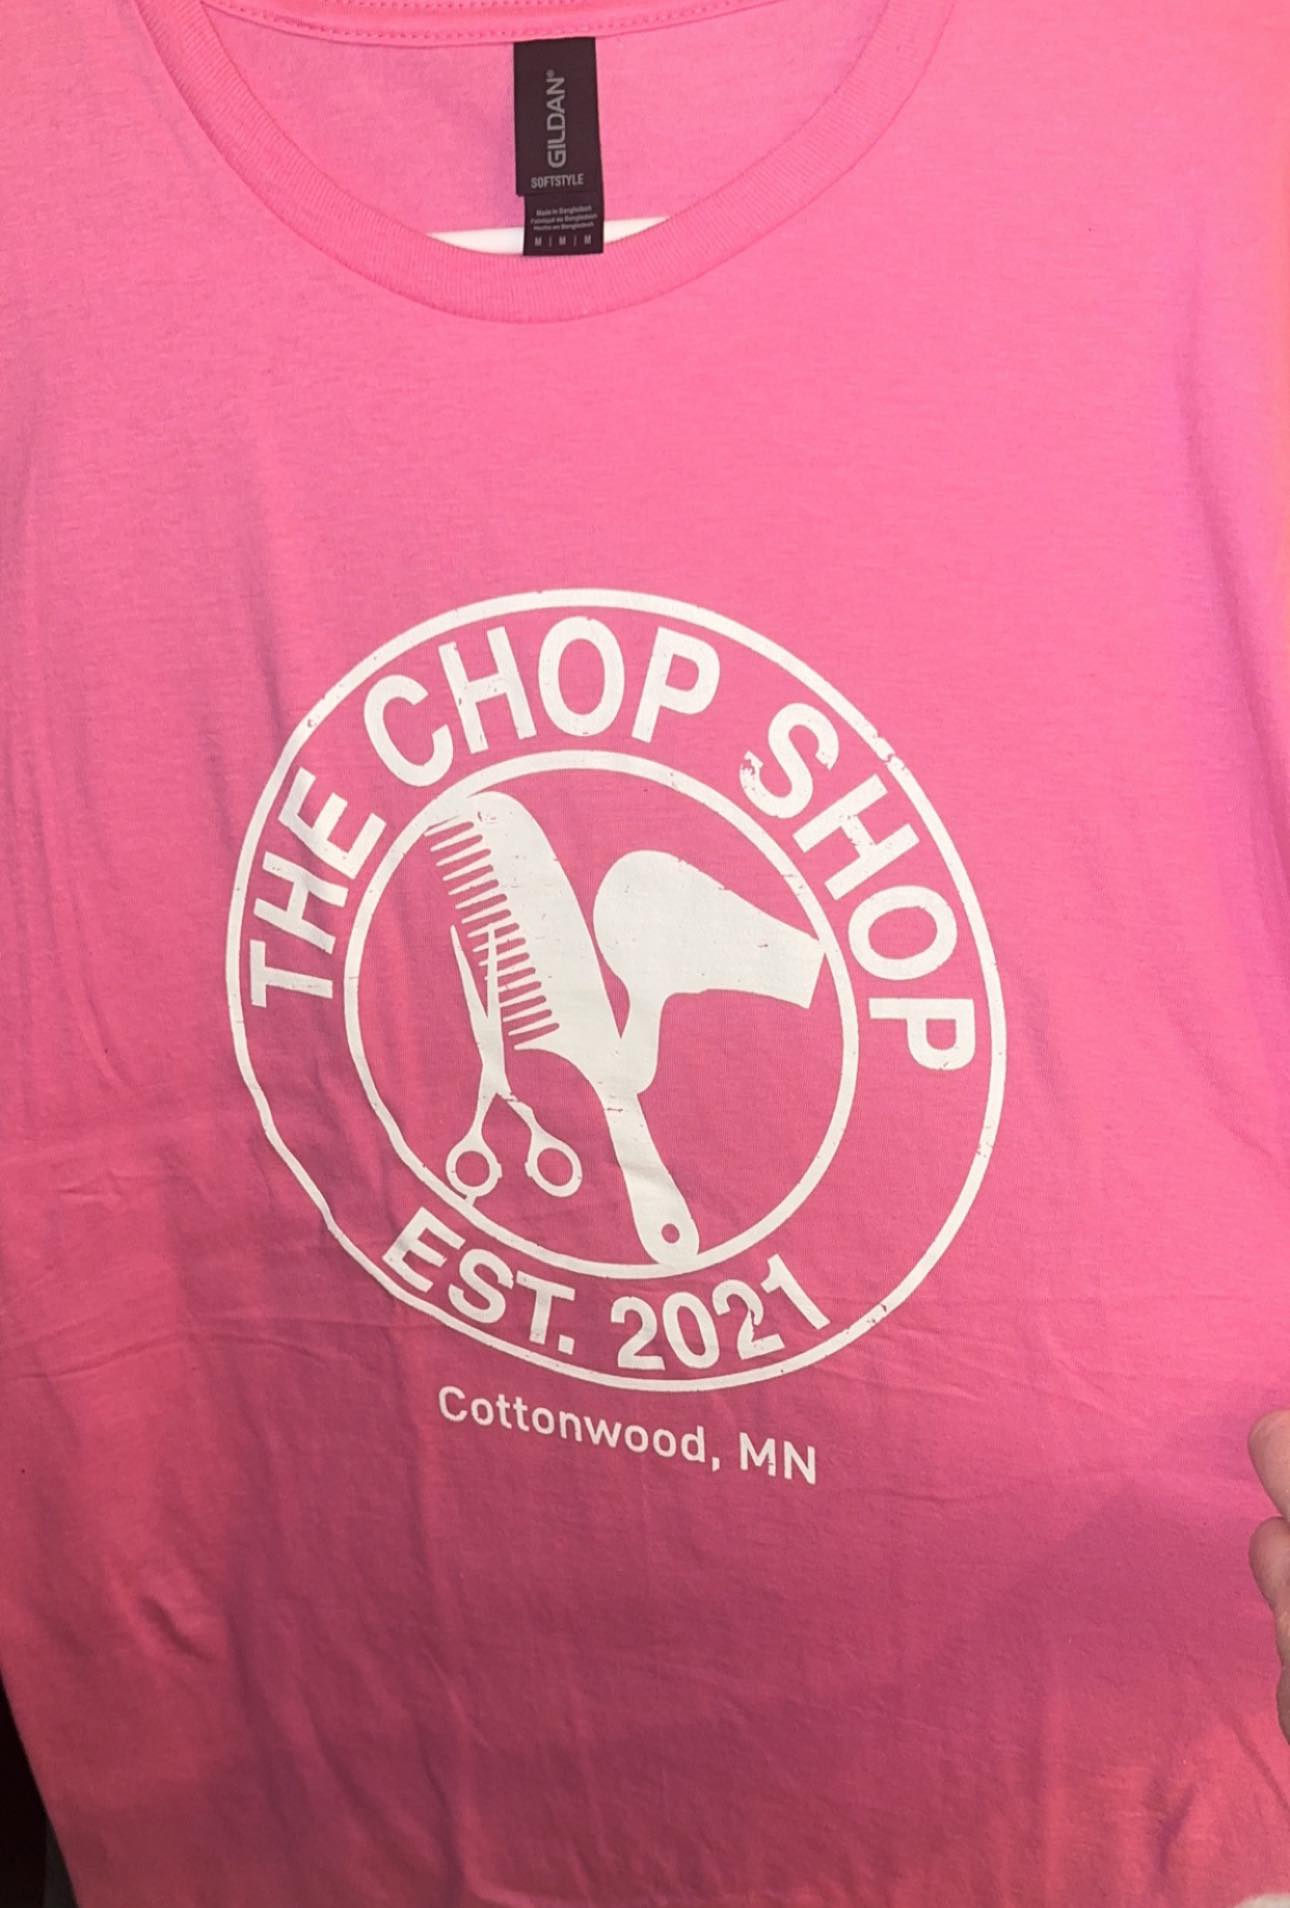 The Chop Shop E Main St, Cottonwood Minnesota 56229